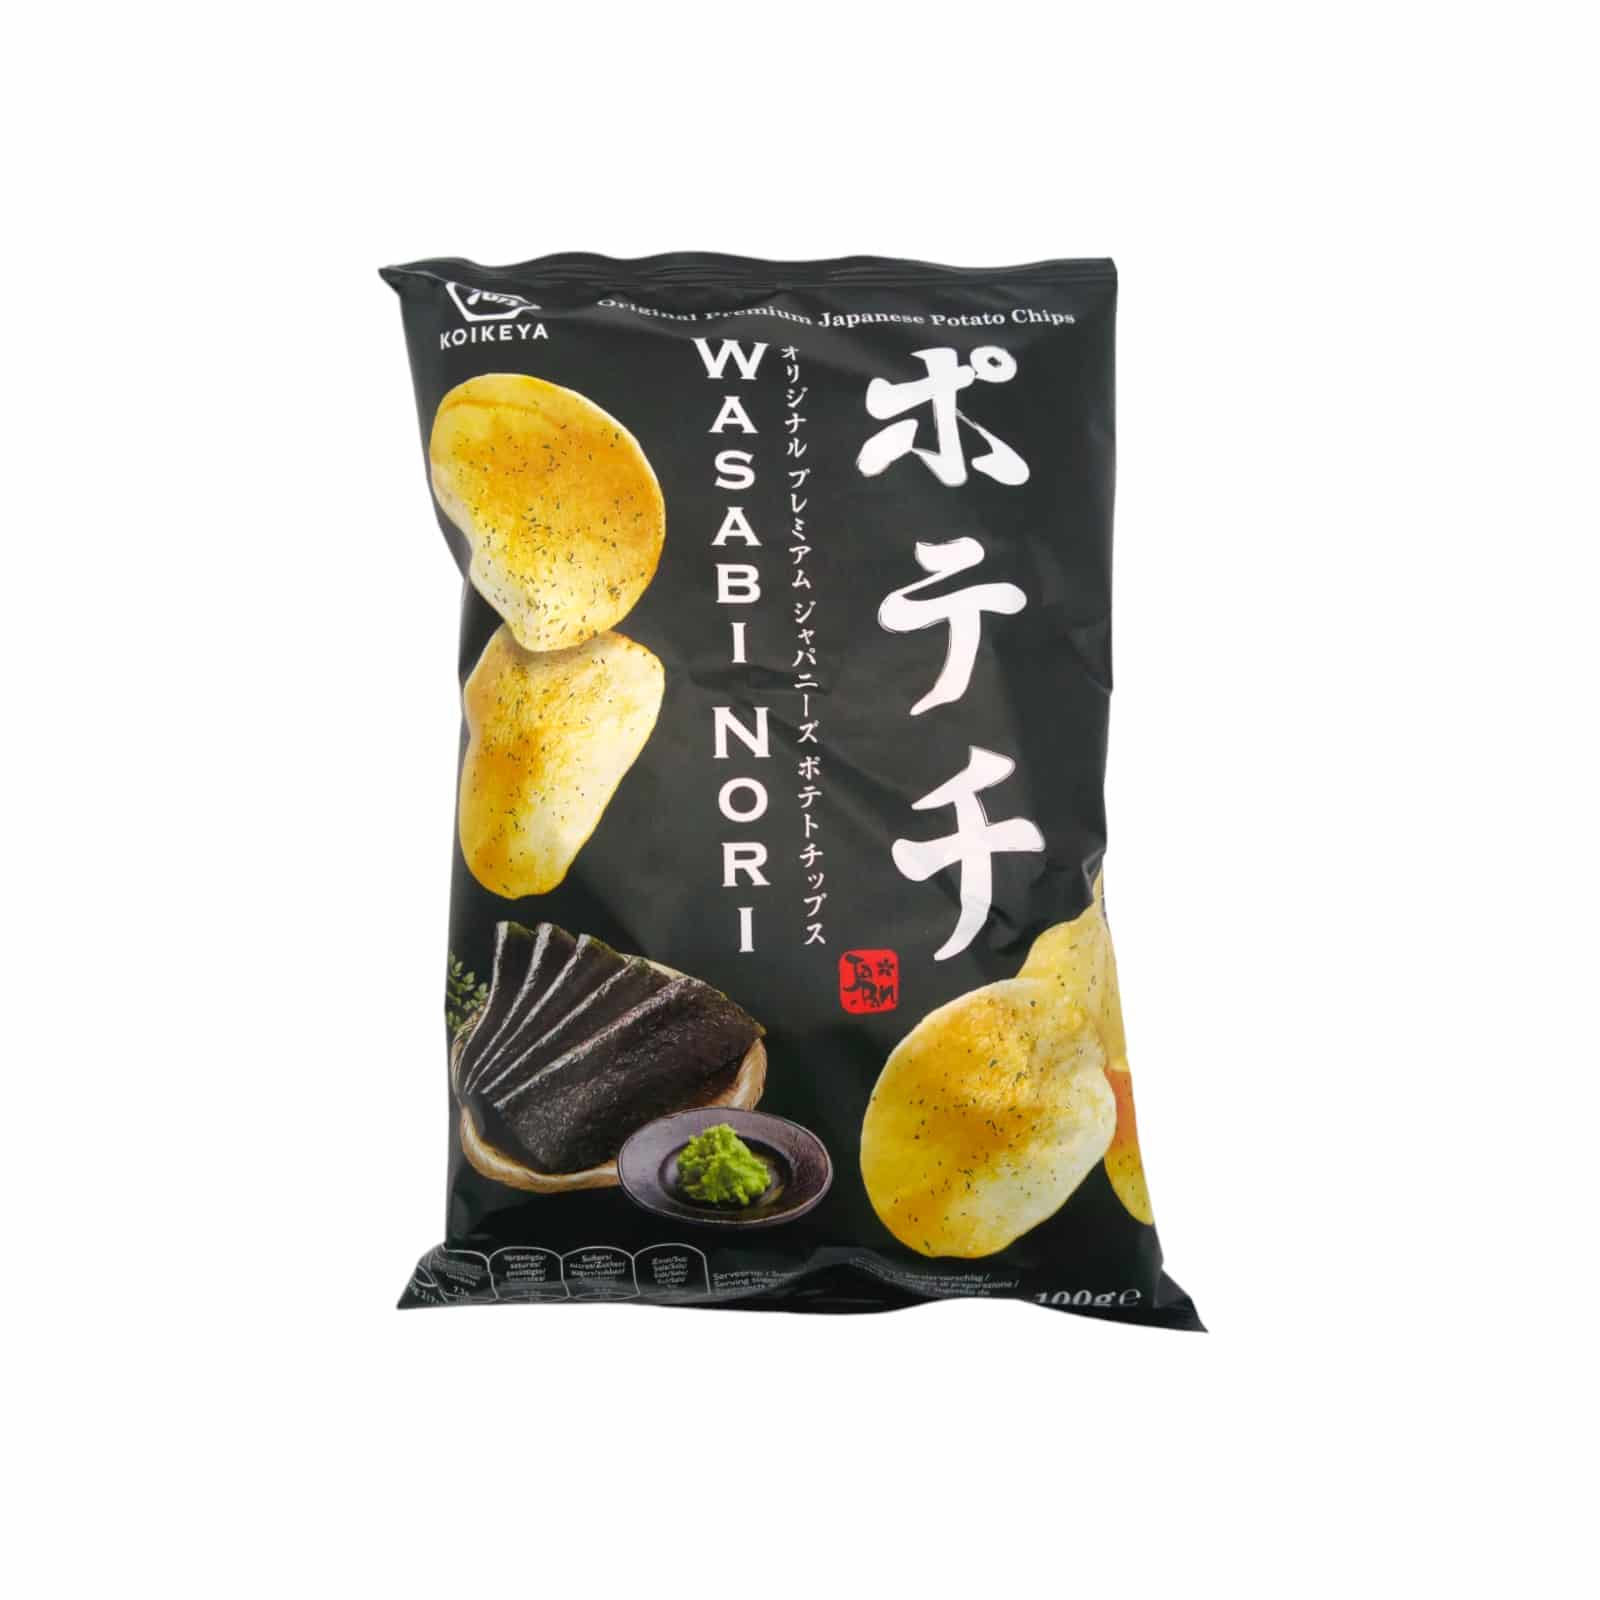 Koikeya Chips Wasabi Nori 100g